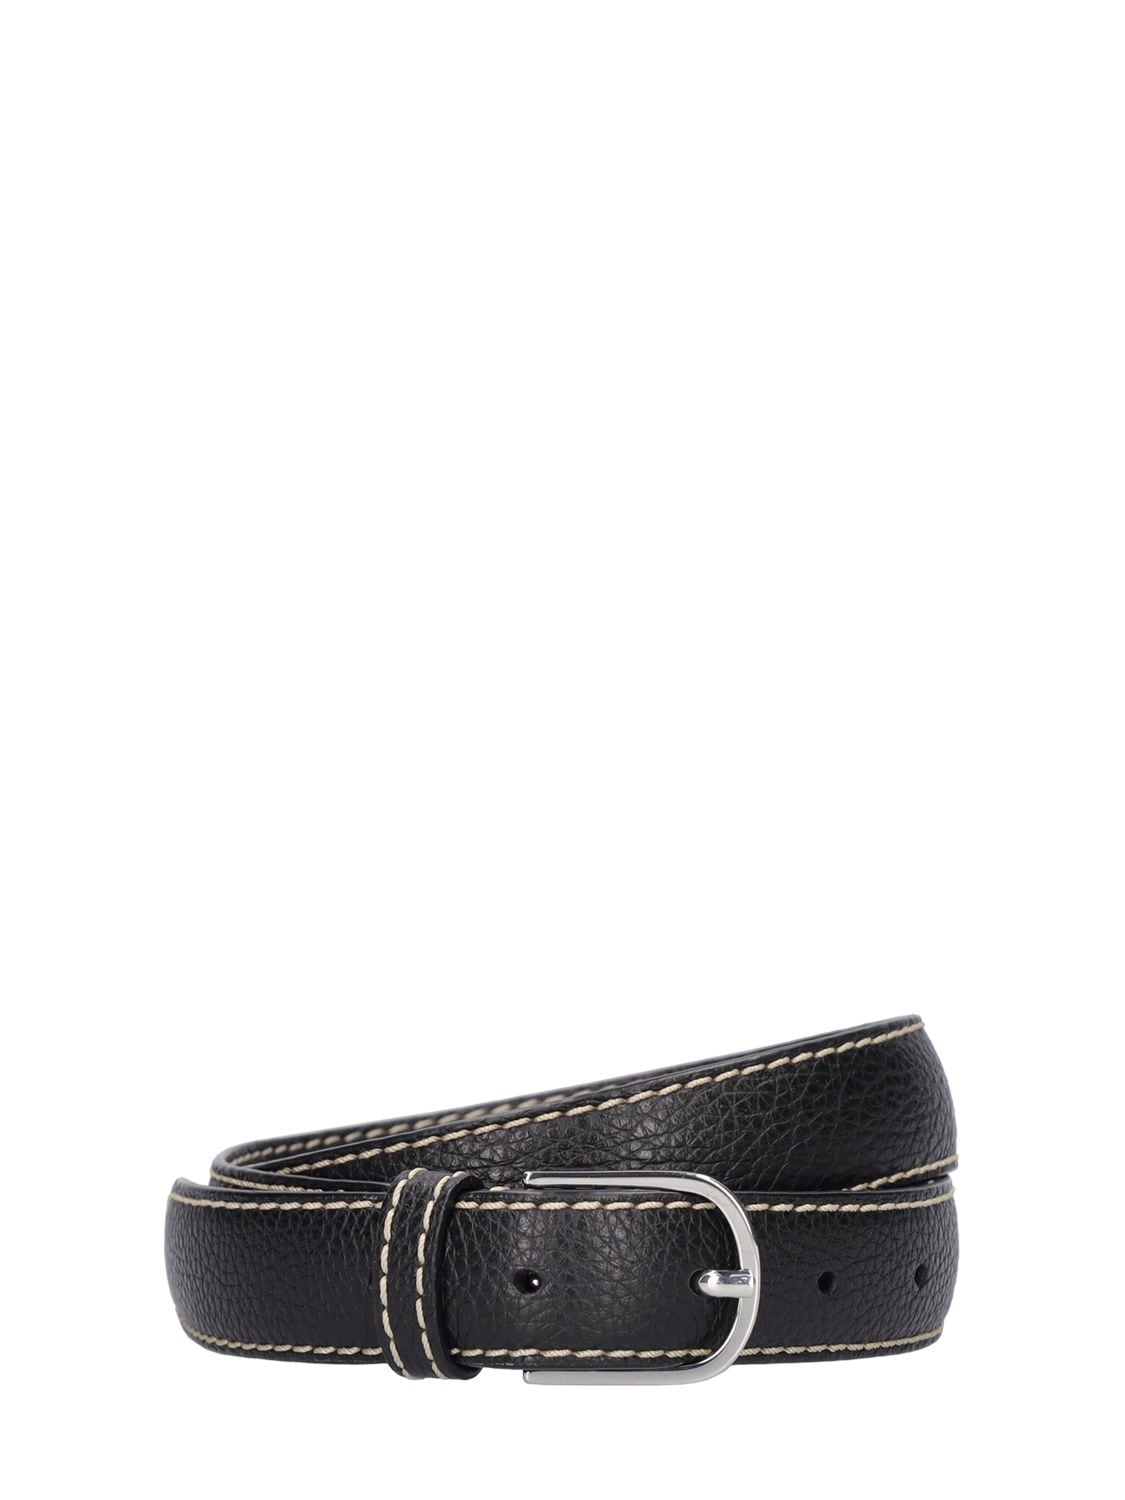 Image of Slim Leather Belt